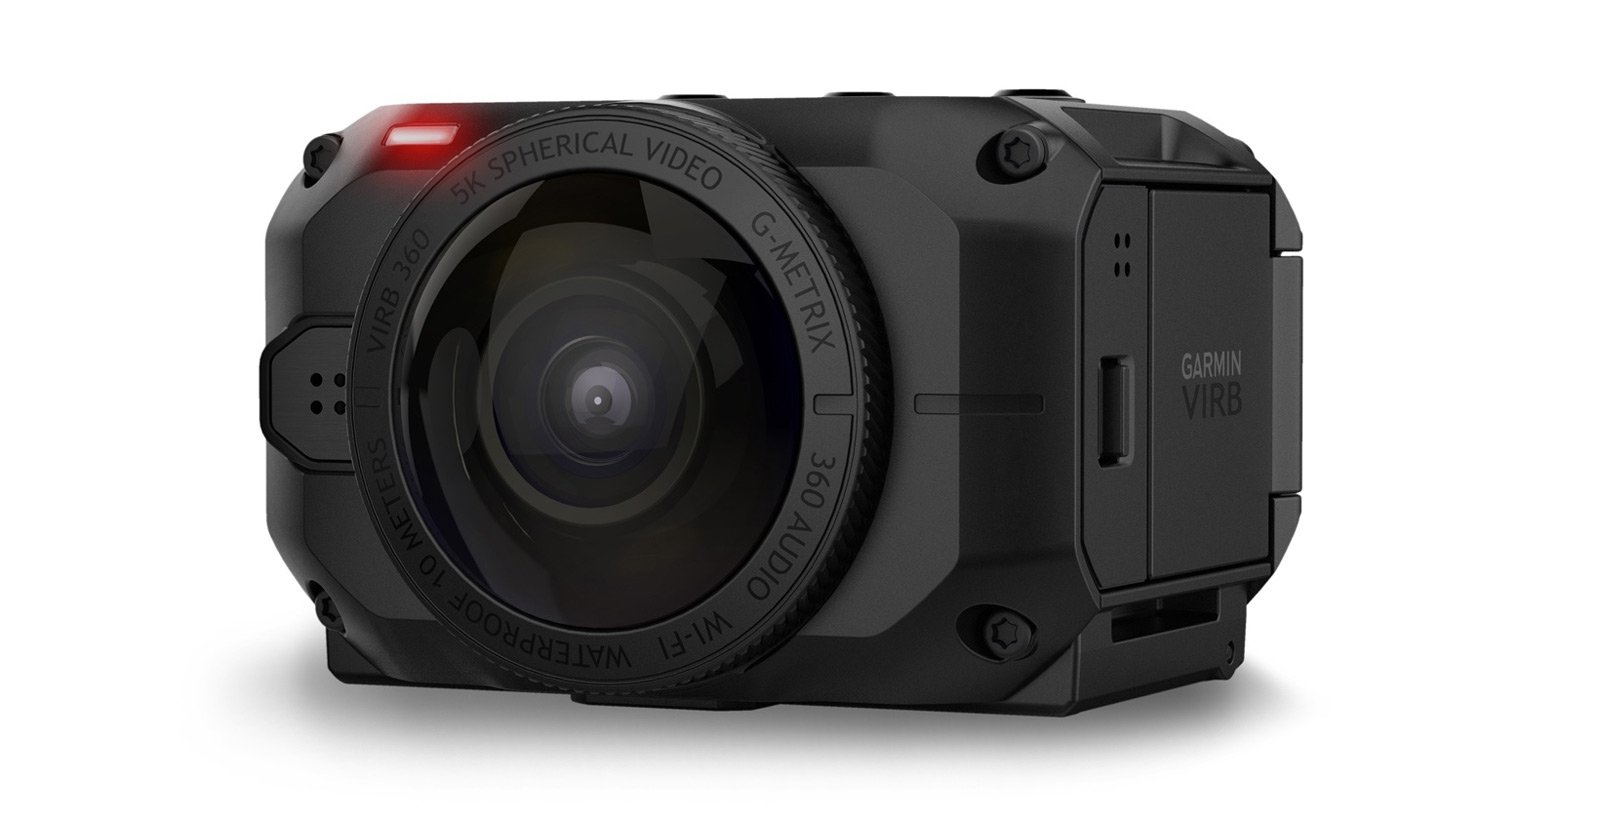 The Garmin VIRB 360 is a Waterproof 360° Camera That Shoots 5.7K